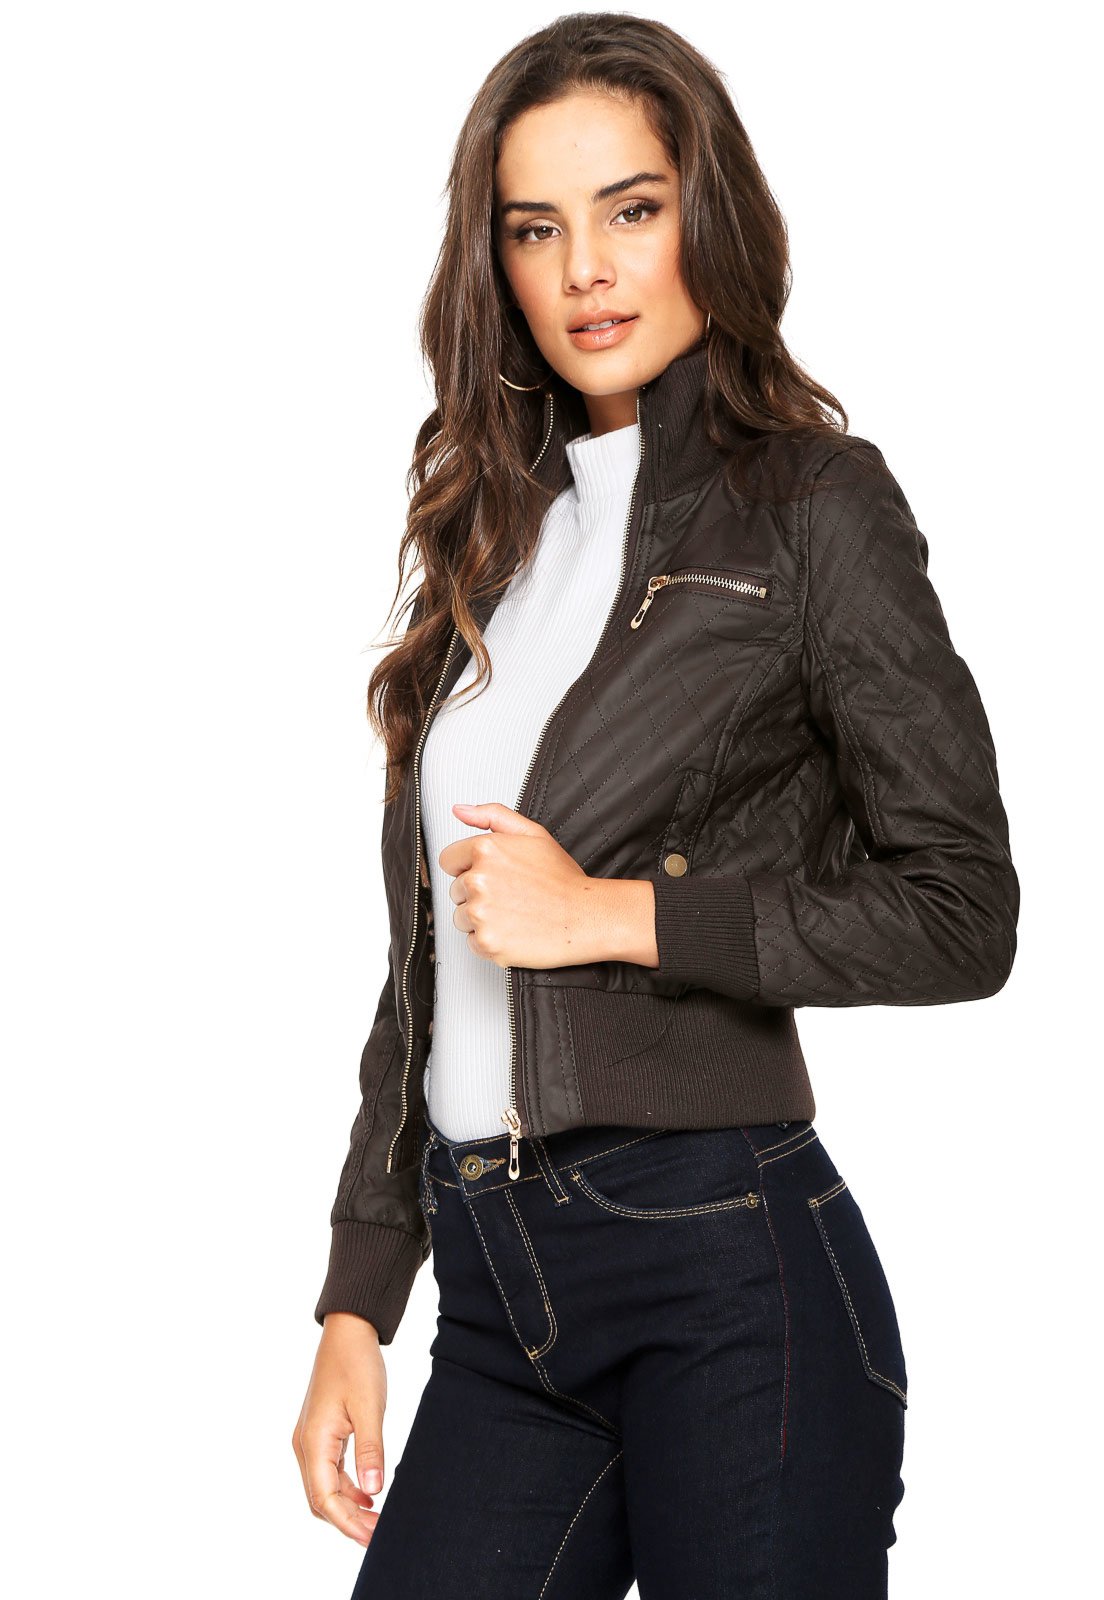 jaqueta de couro legitimo feminina mercado livre